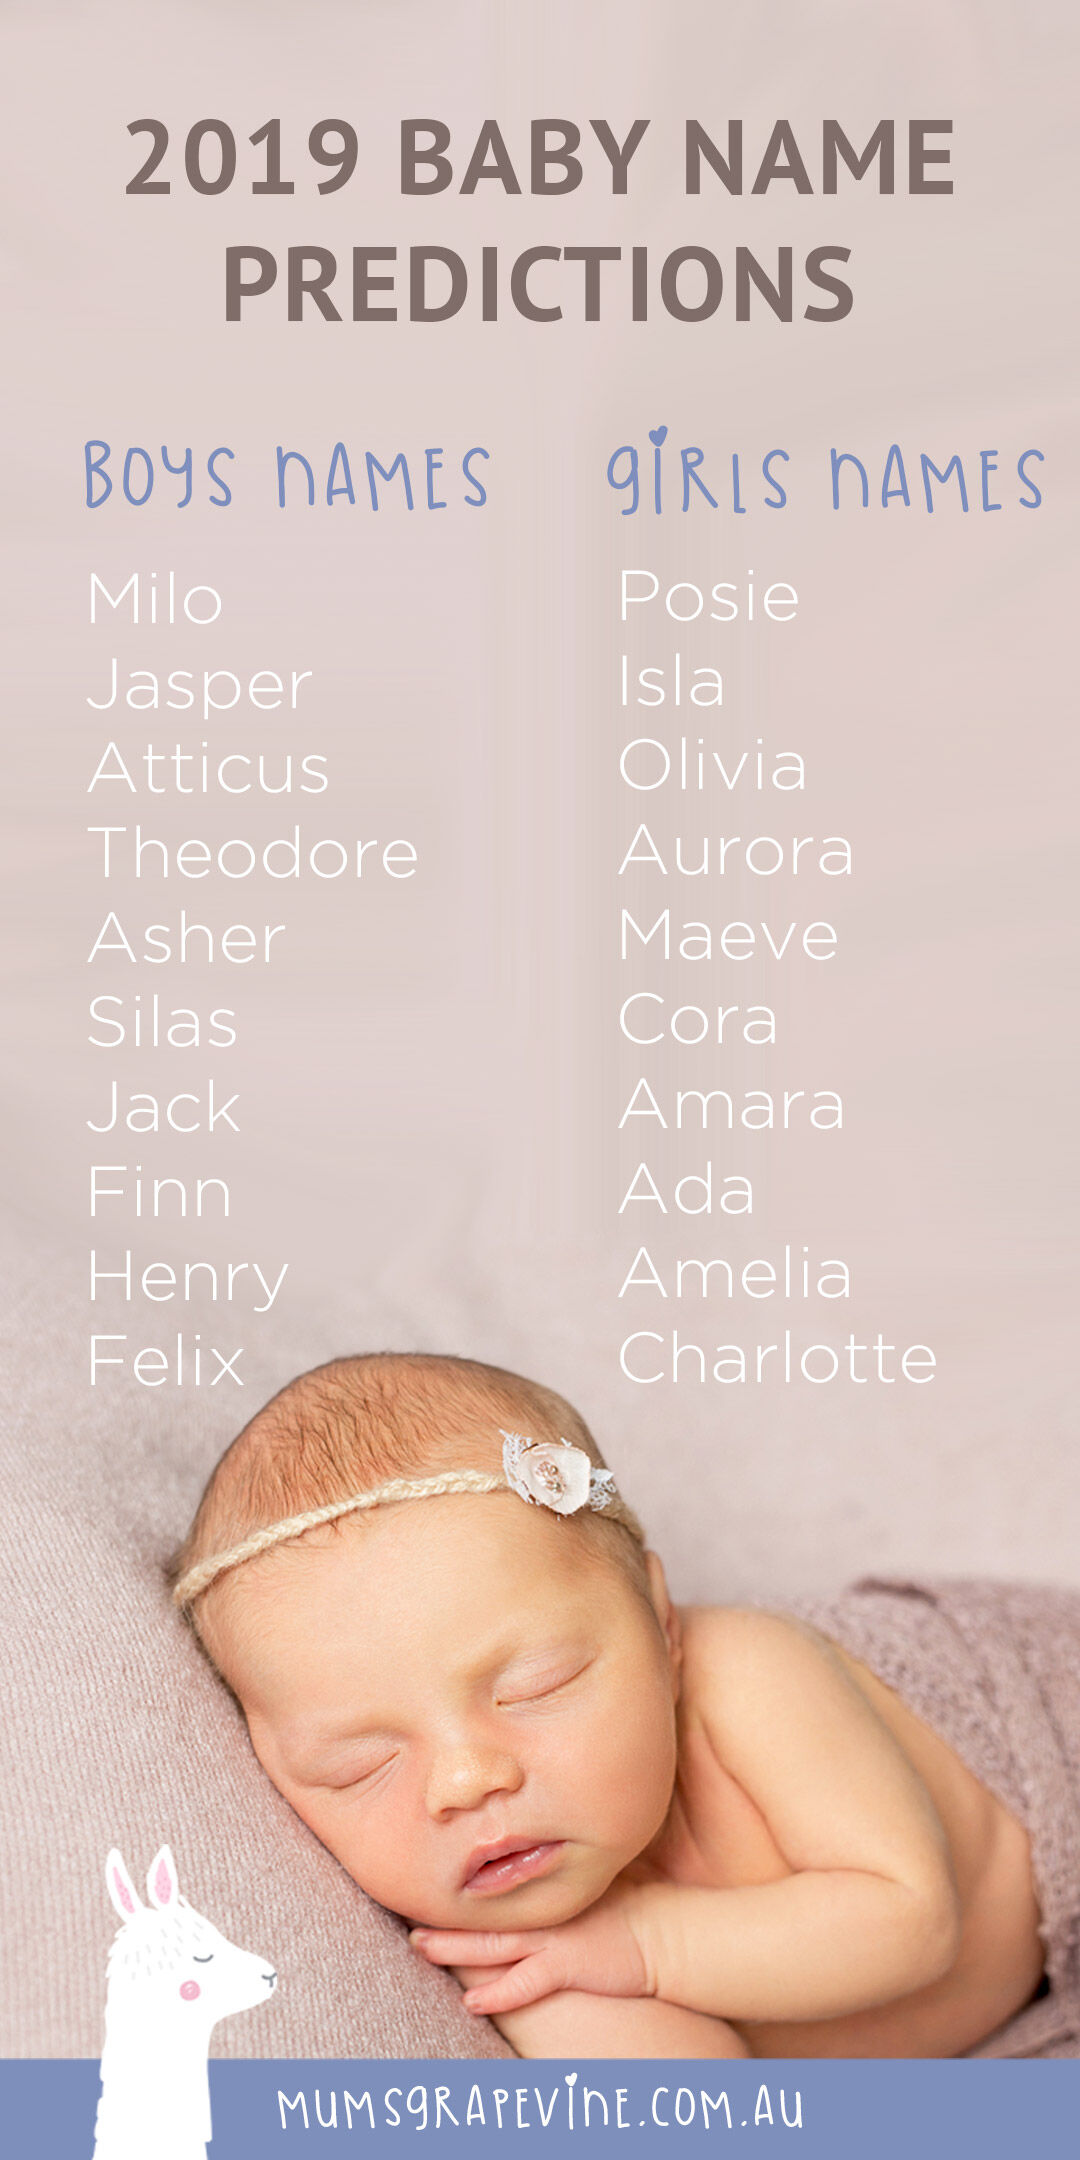 Baby name predictions